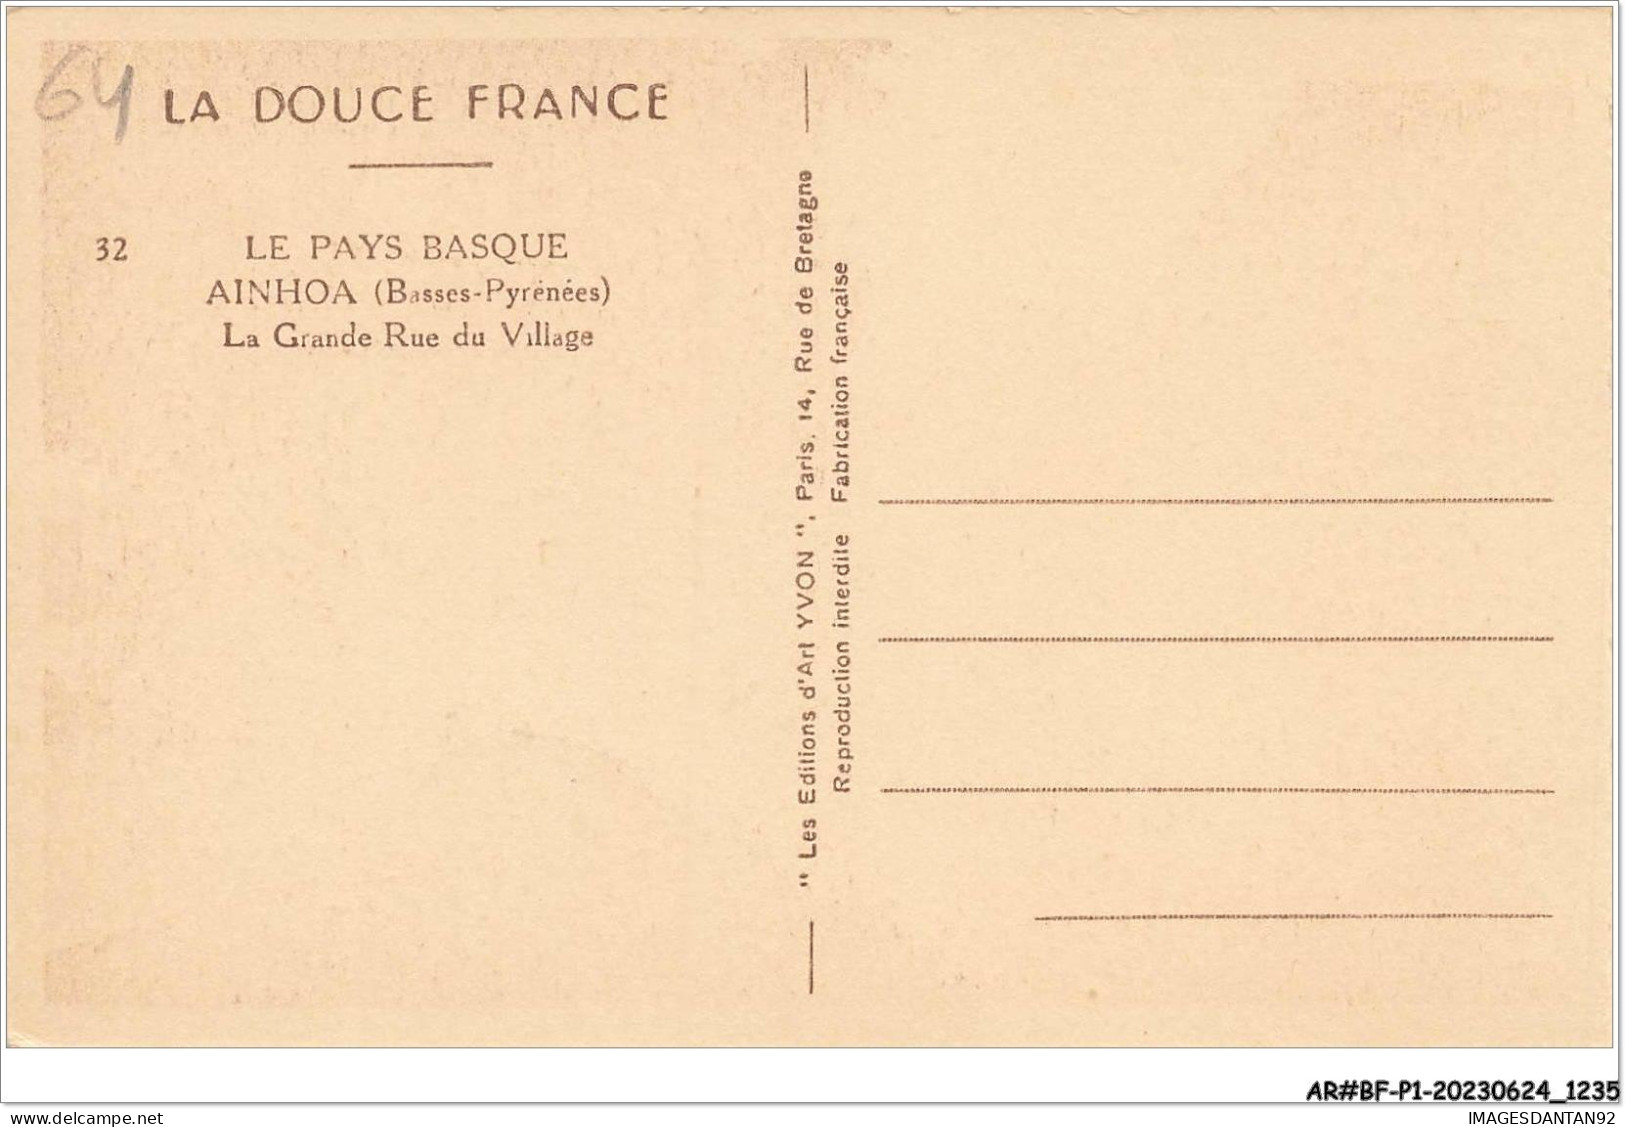 AR#BFP1-64-0618 - La Douce France - AINHOA - La Grande Rue Du Village - Ainhoa